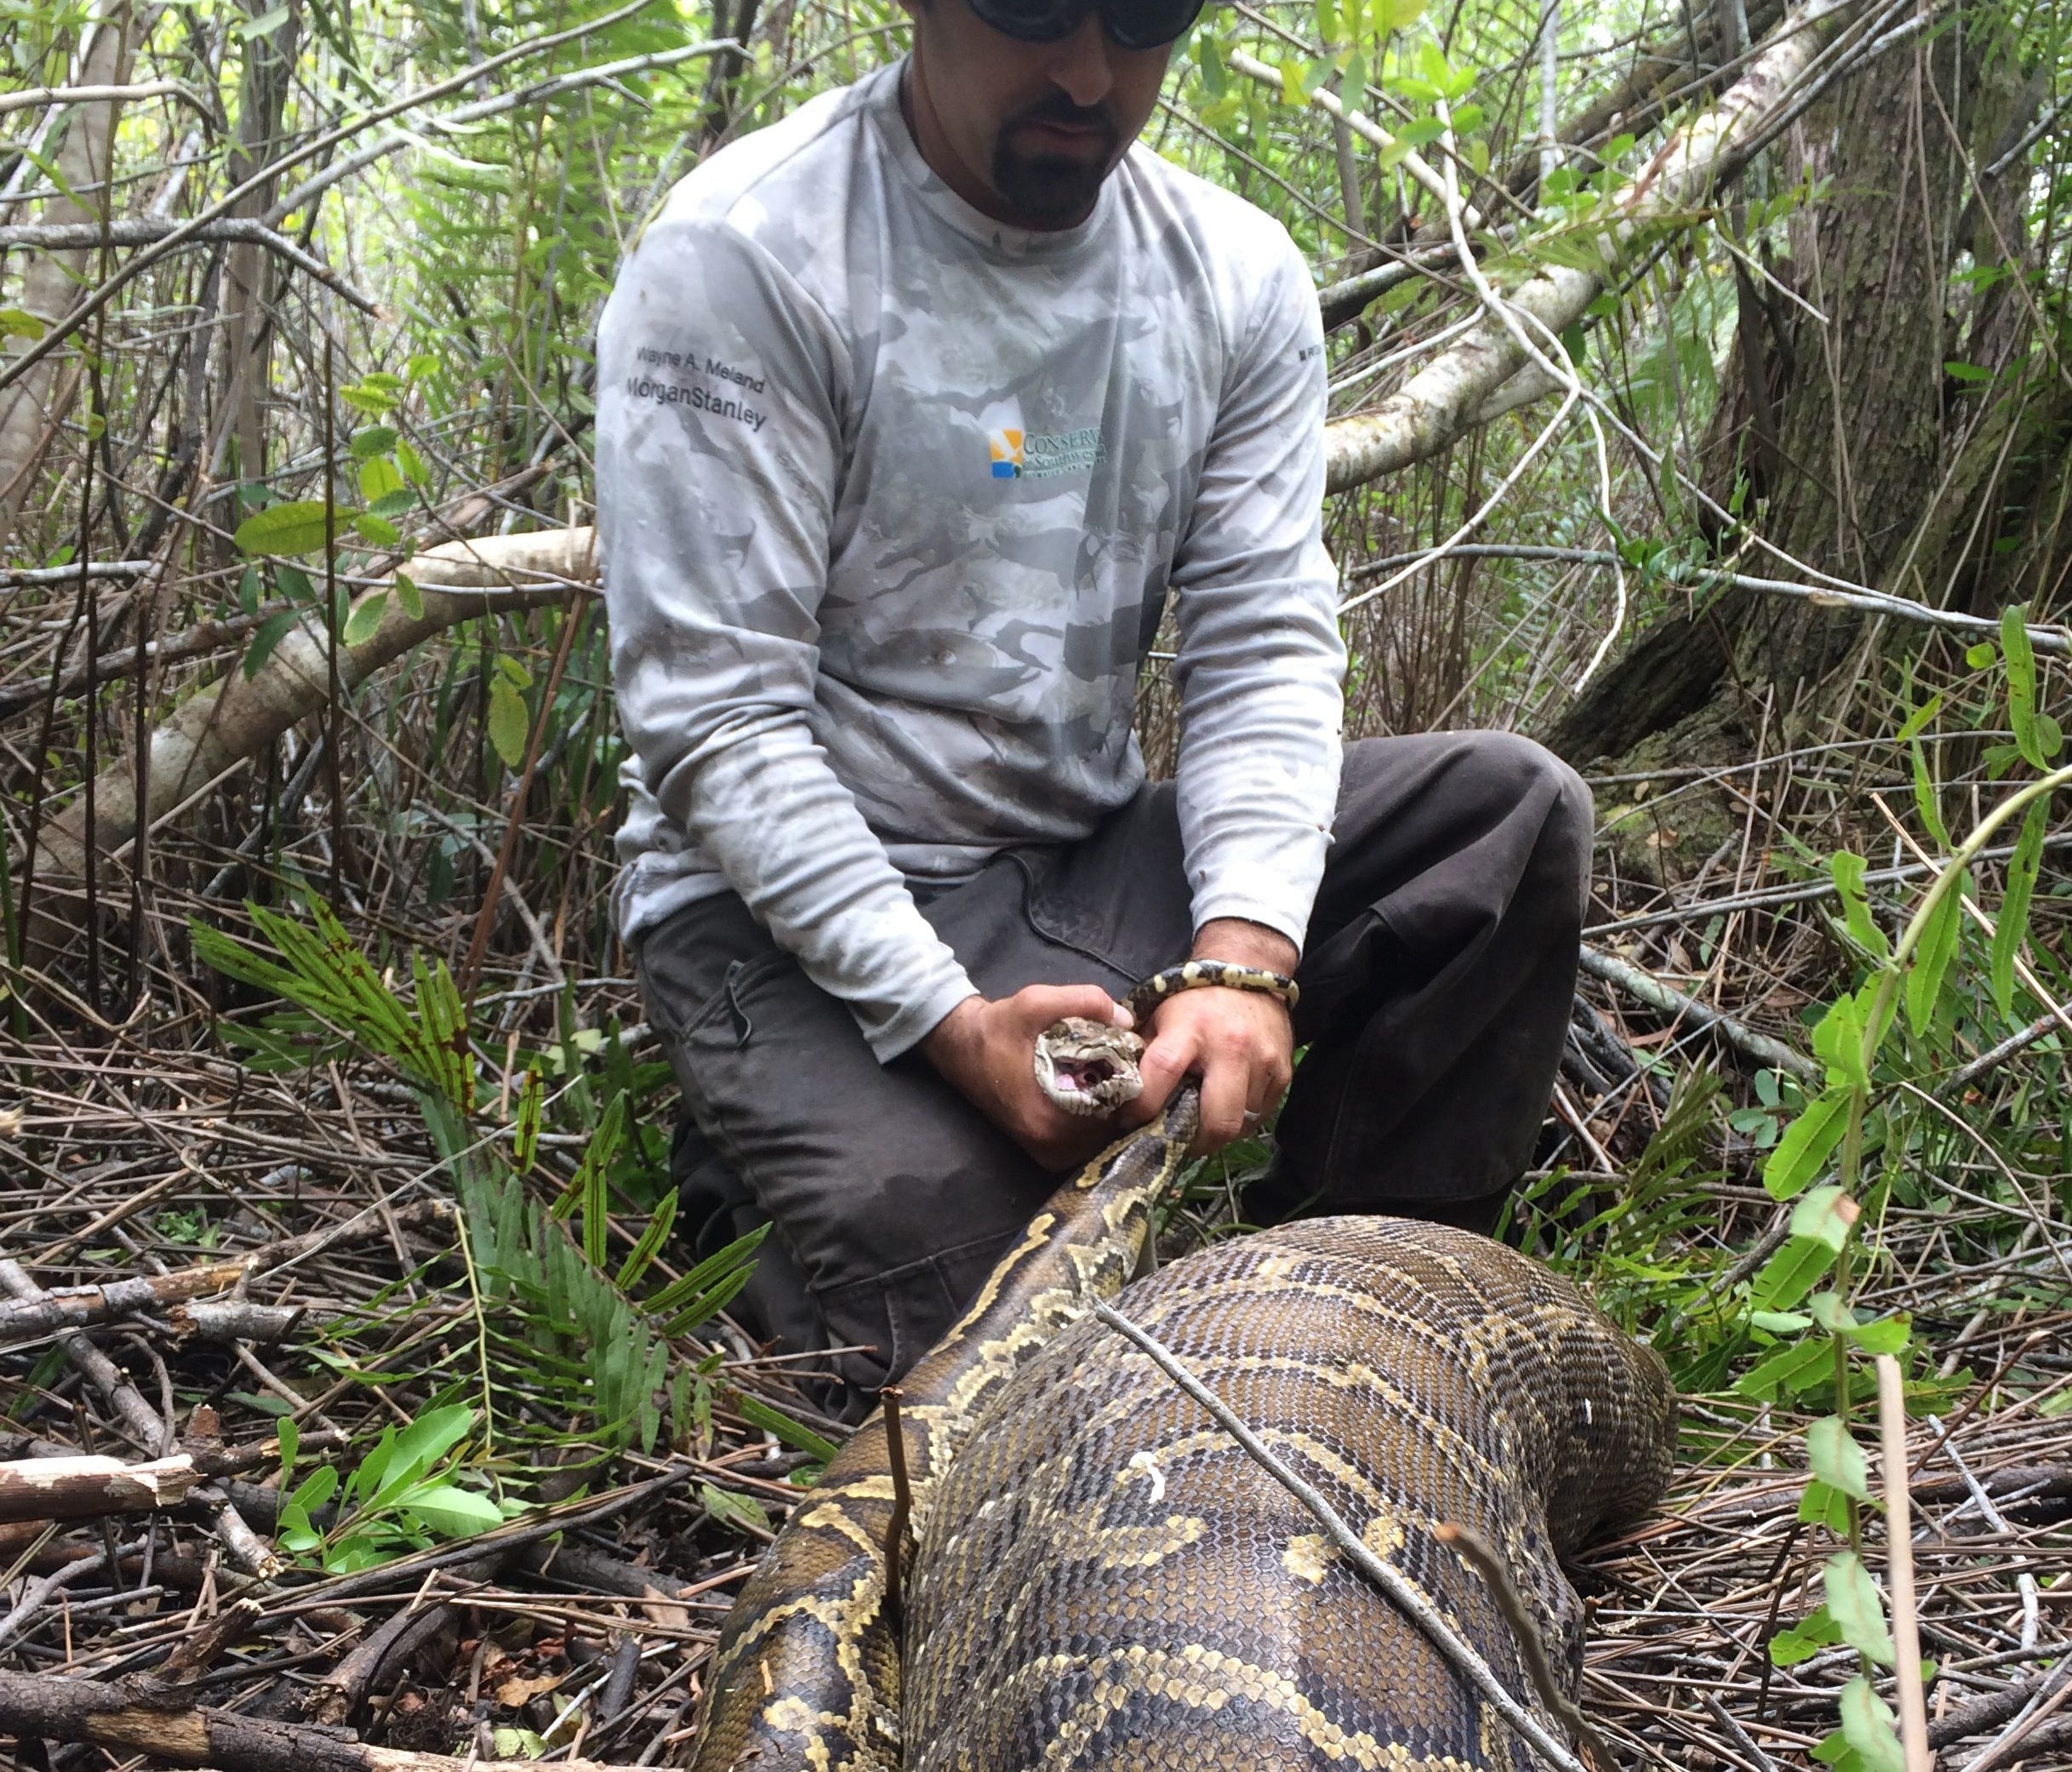 A Burmese python captured in Southwest Florida ingested a large prey animal.